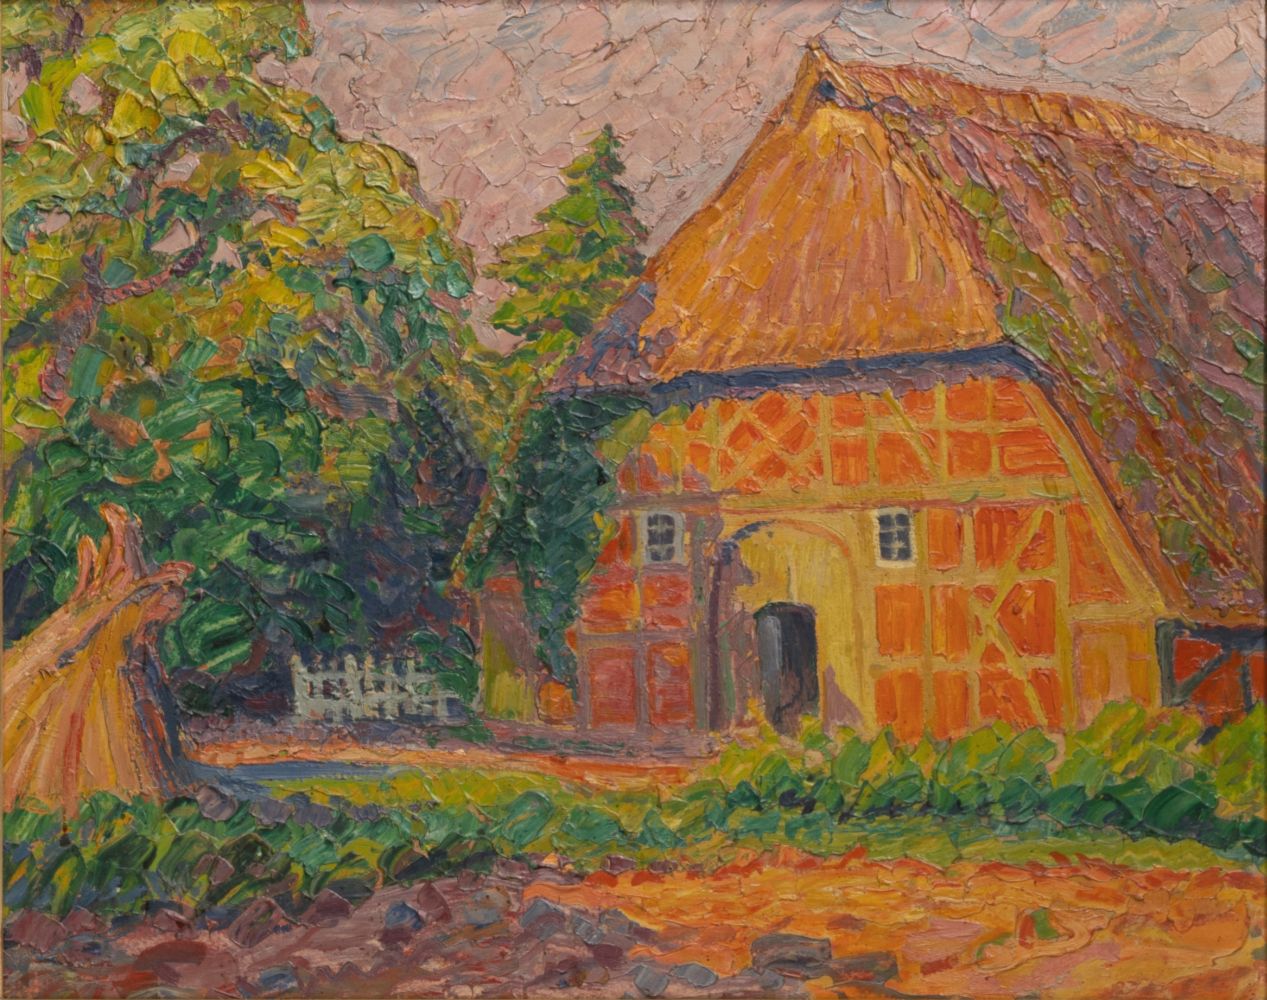 Blunck-Heikendorf, Heinrich (Kiel 1891 - Kiel 1963). Barn.